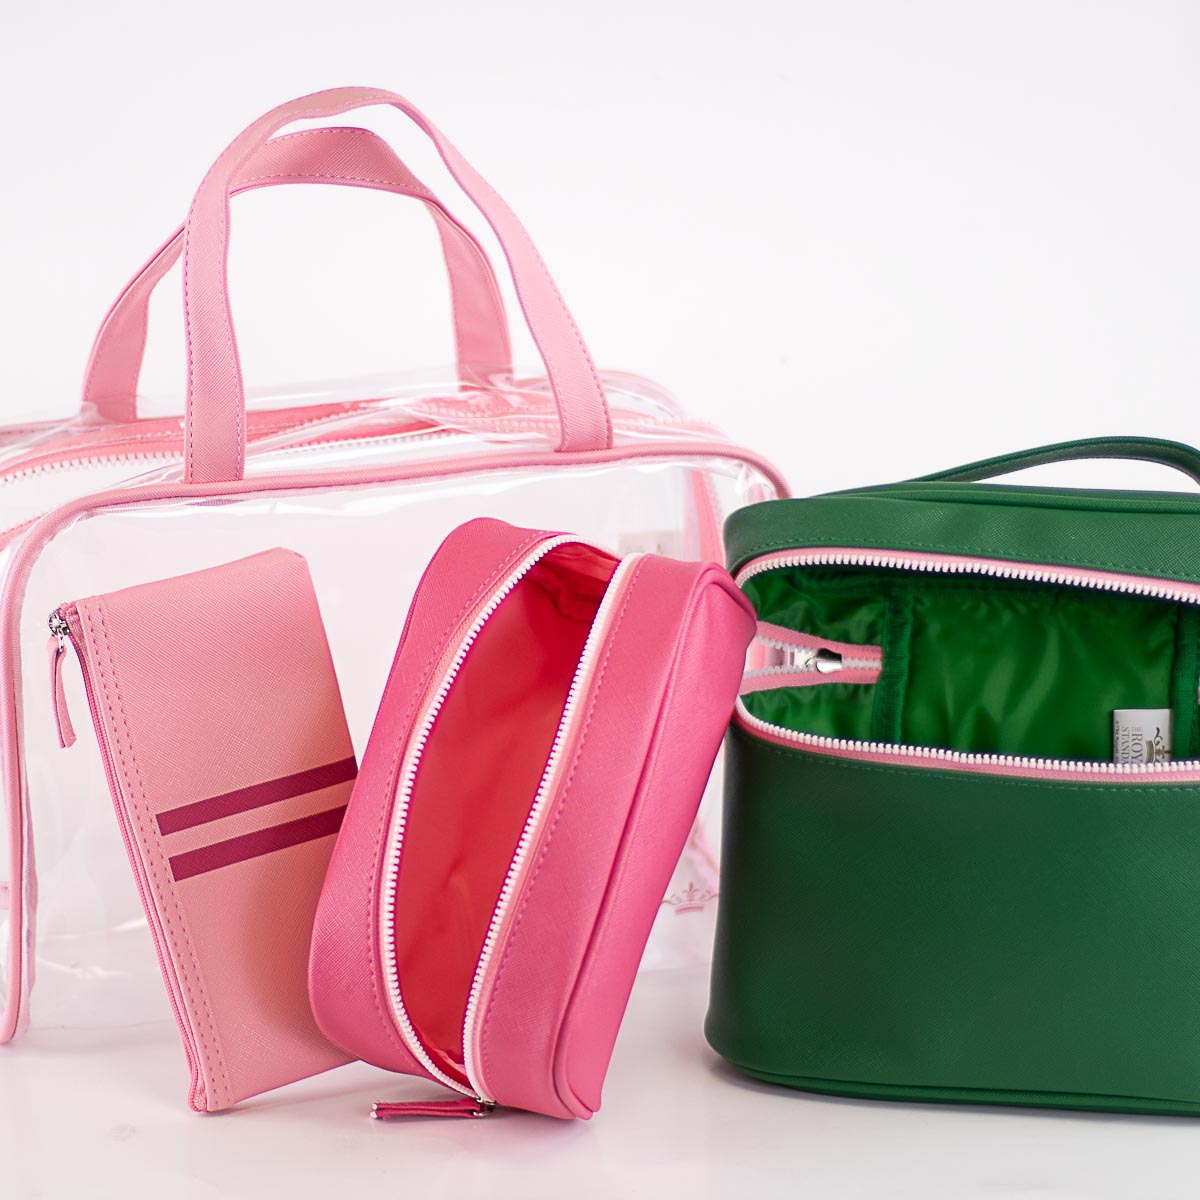 Livie Travel Gift Set in Pink & Kelly Green